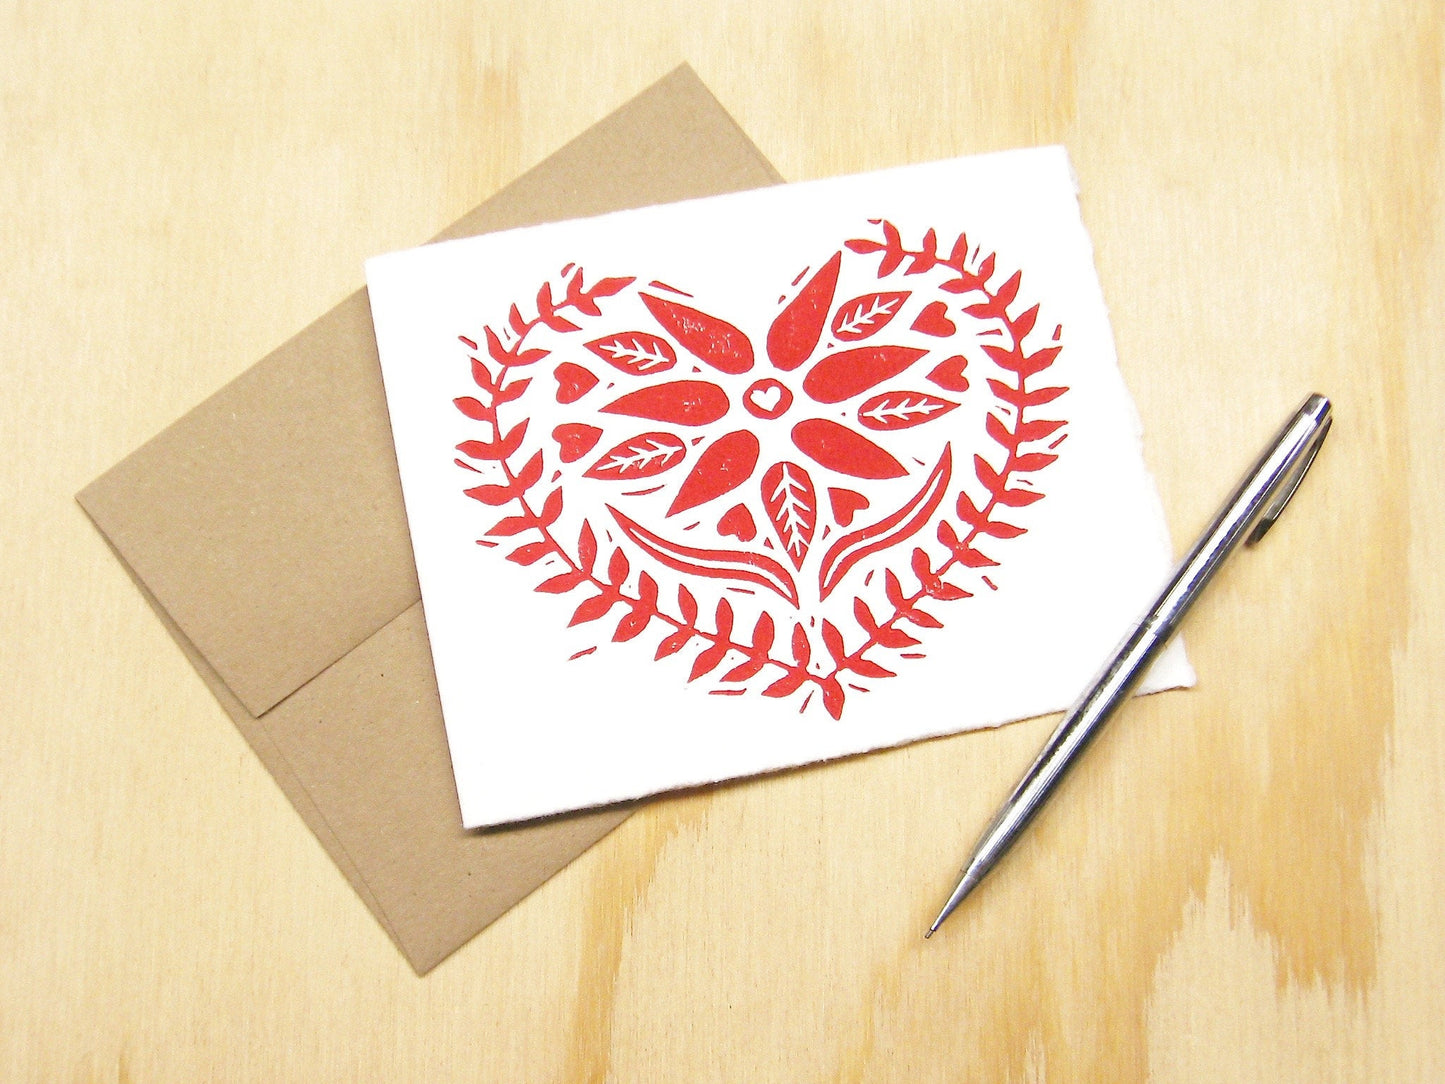 Swedish Red Heart single card - woodblock printed